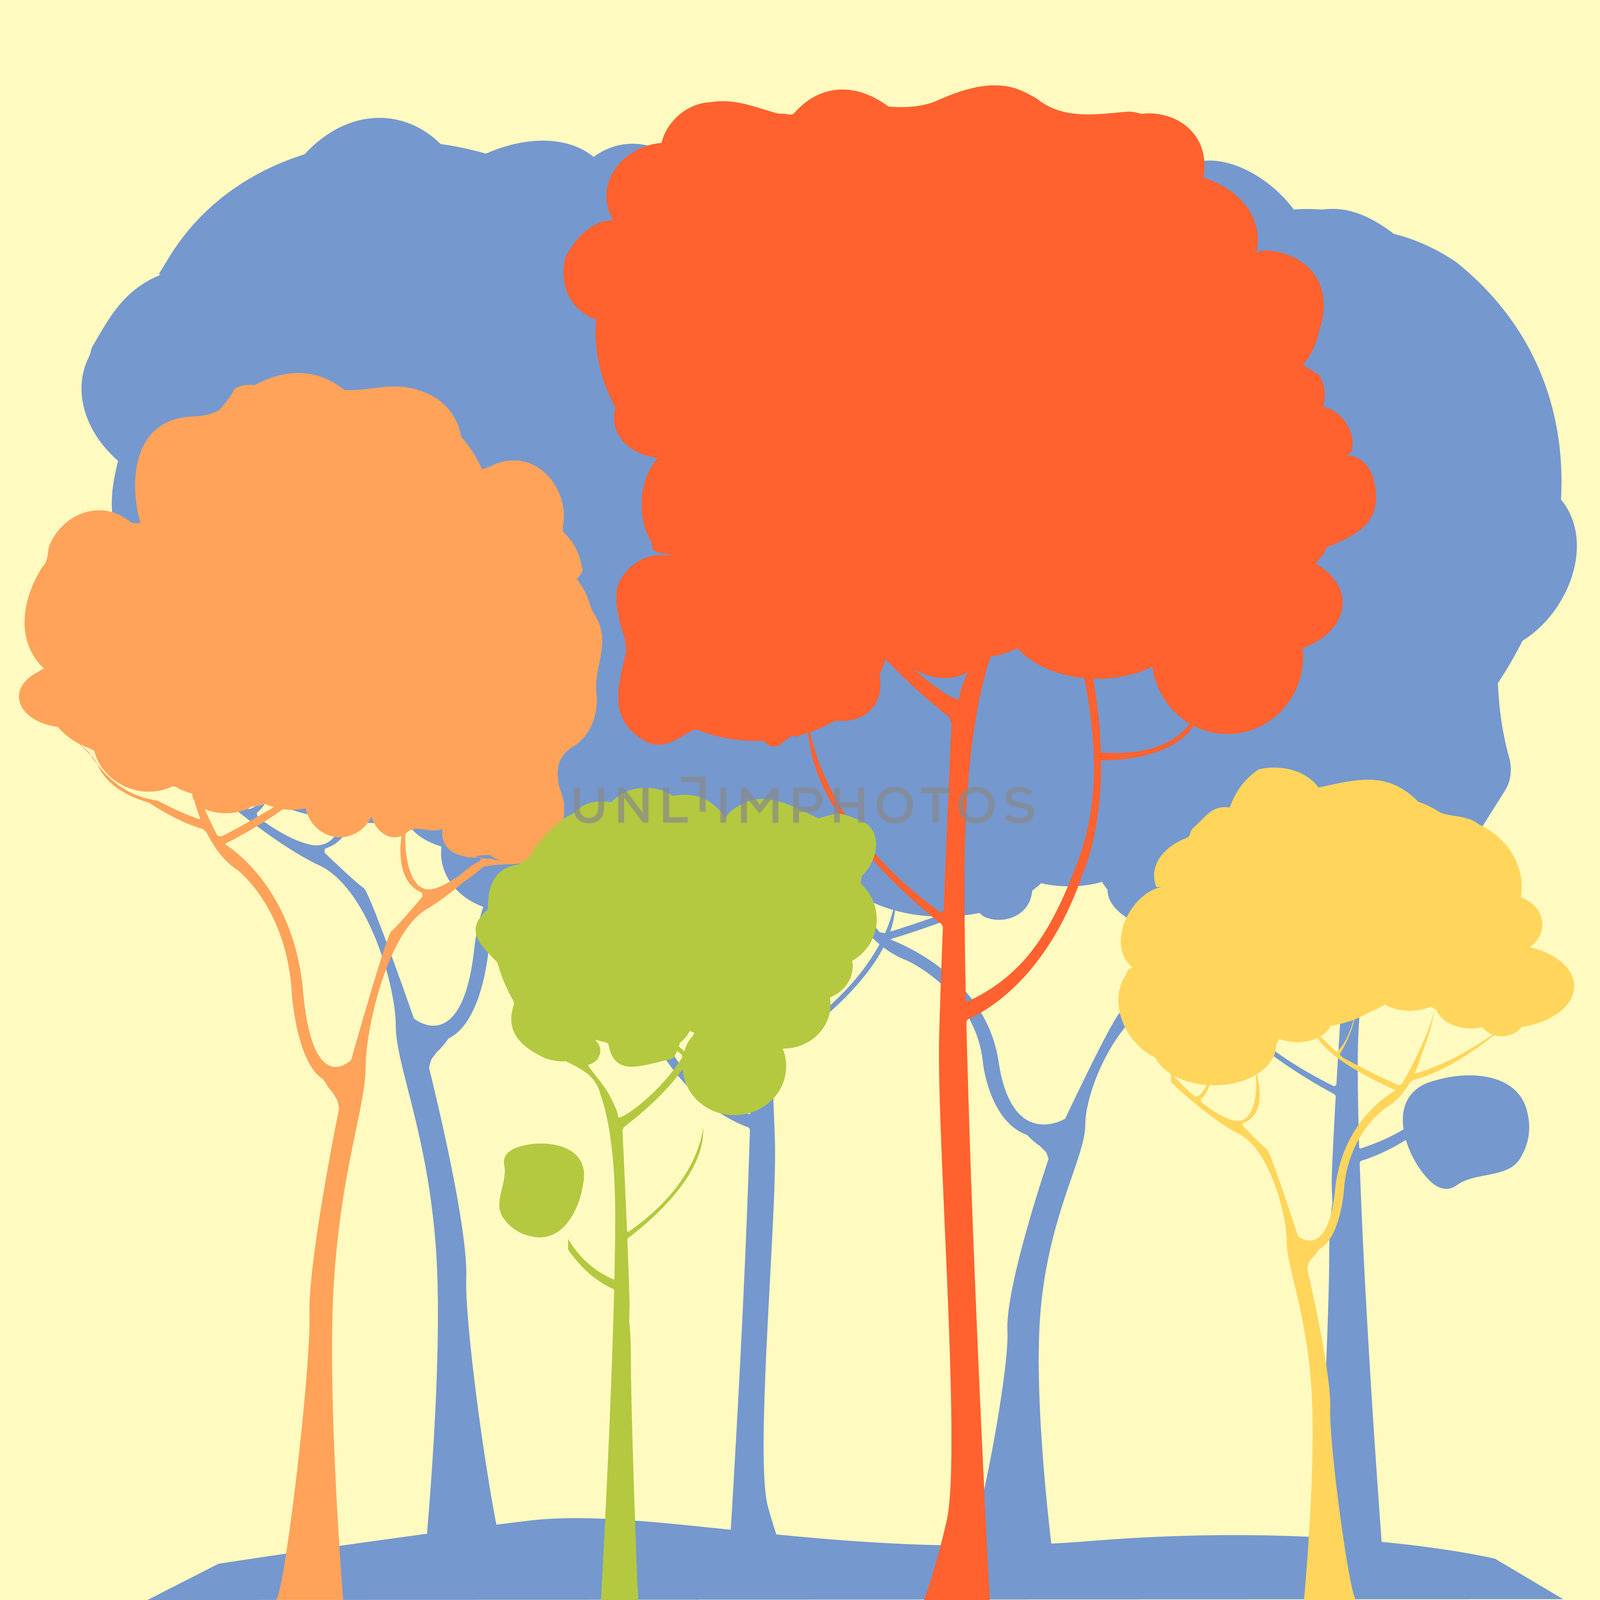 Pastel forest illustration, stylized trees background